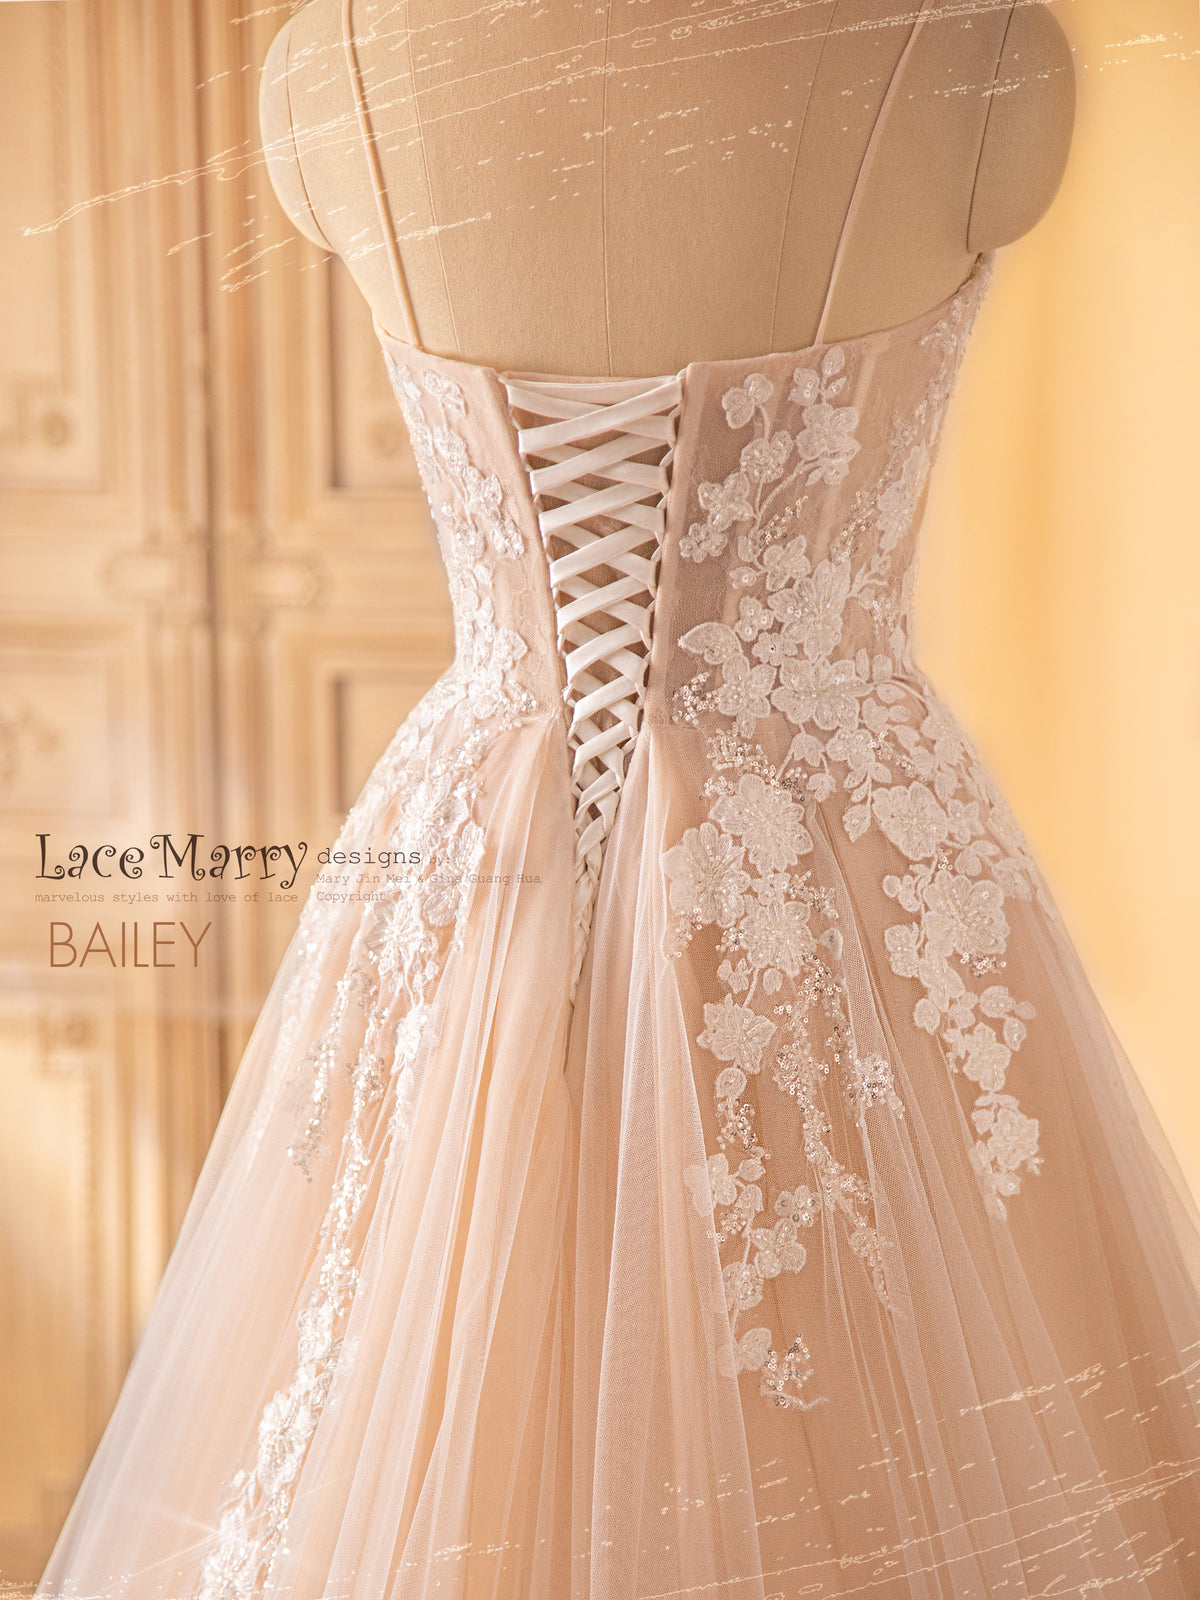 BAILEY / Nude Color Wedding Dress with A Line Skirt